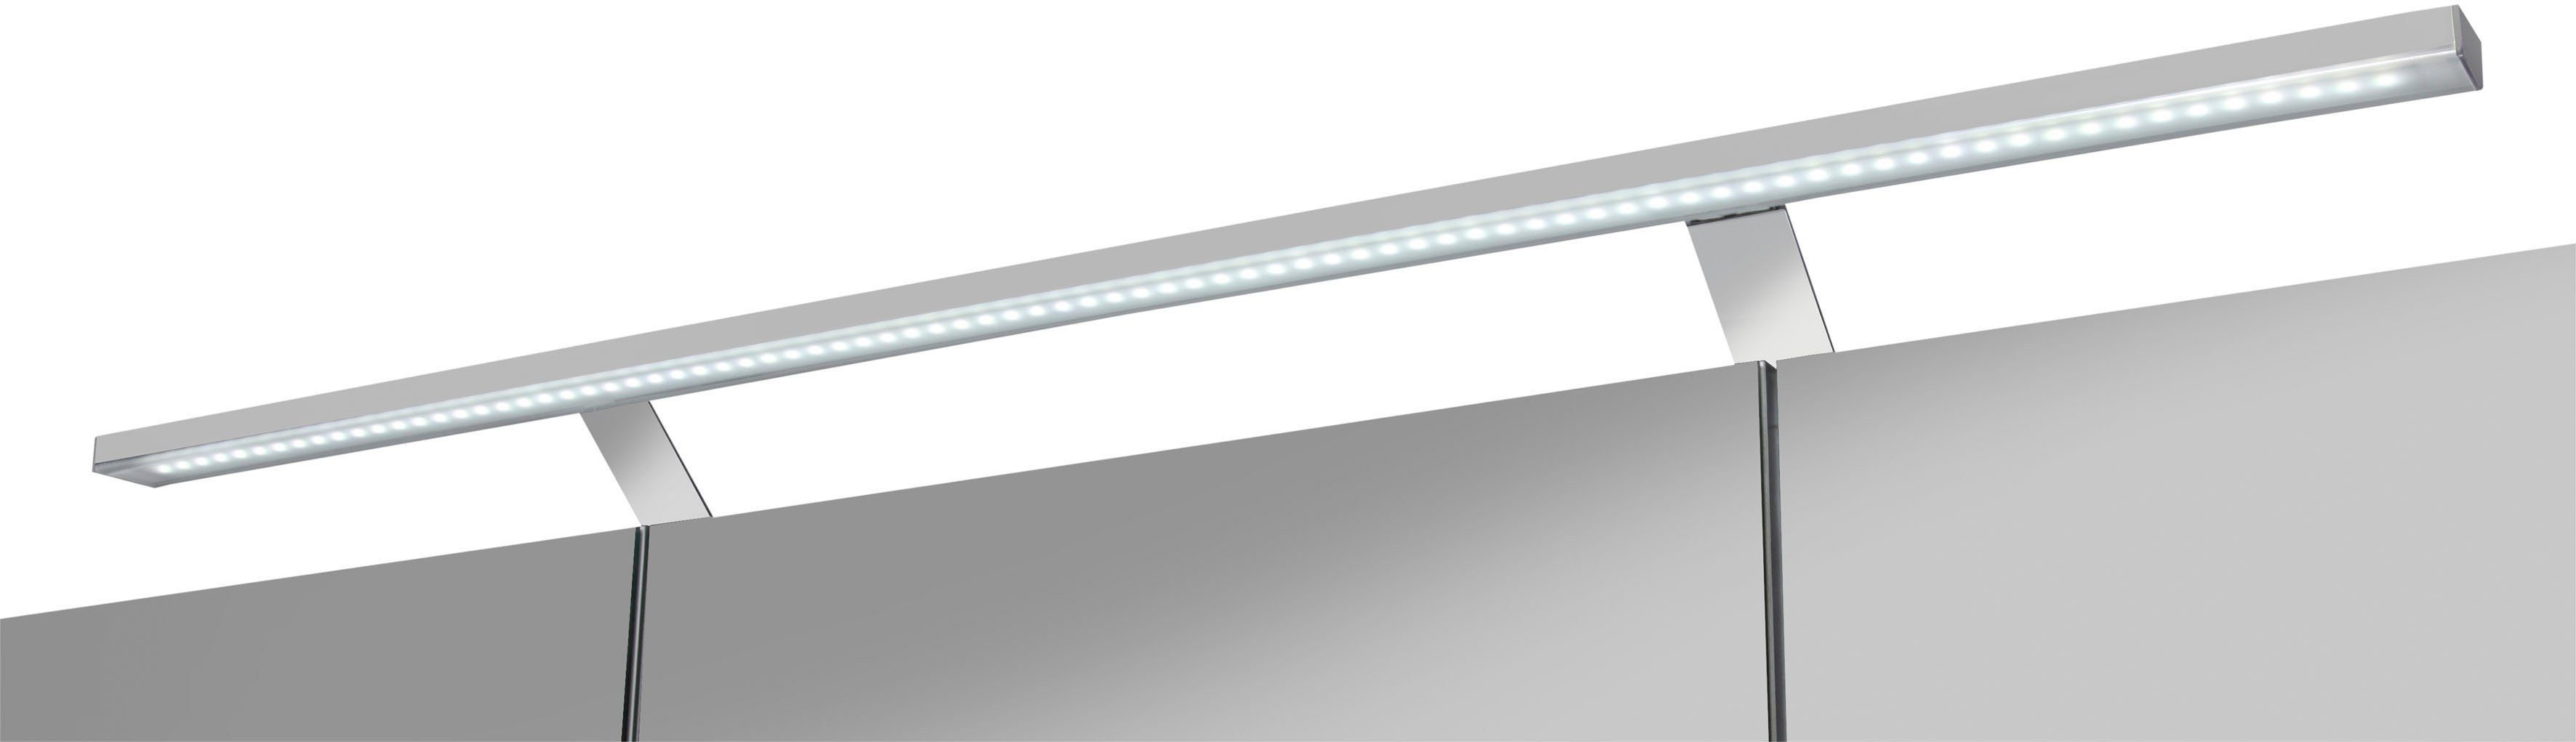 welltime Spiegelschrank Torino Breite | 3-türig, Schalter-/Steckdosenbox kreideweiß kreideweiß cm, LED-Beleuchtung, 100